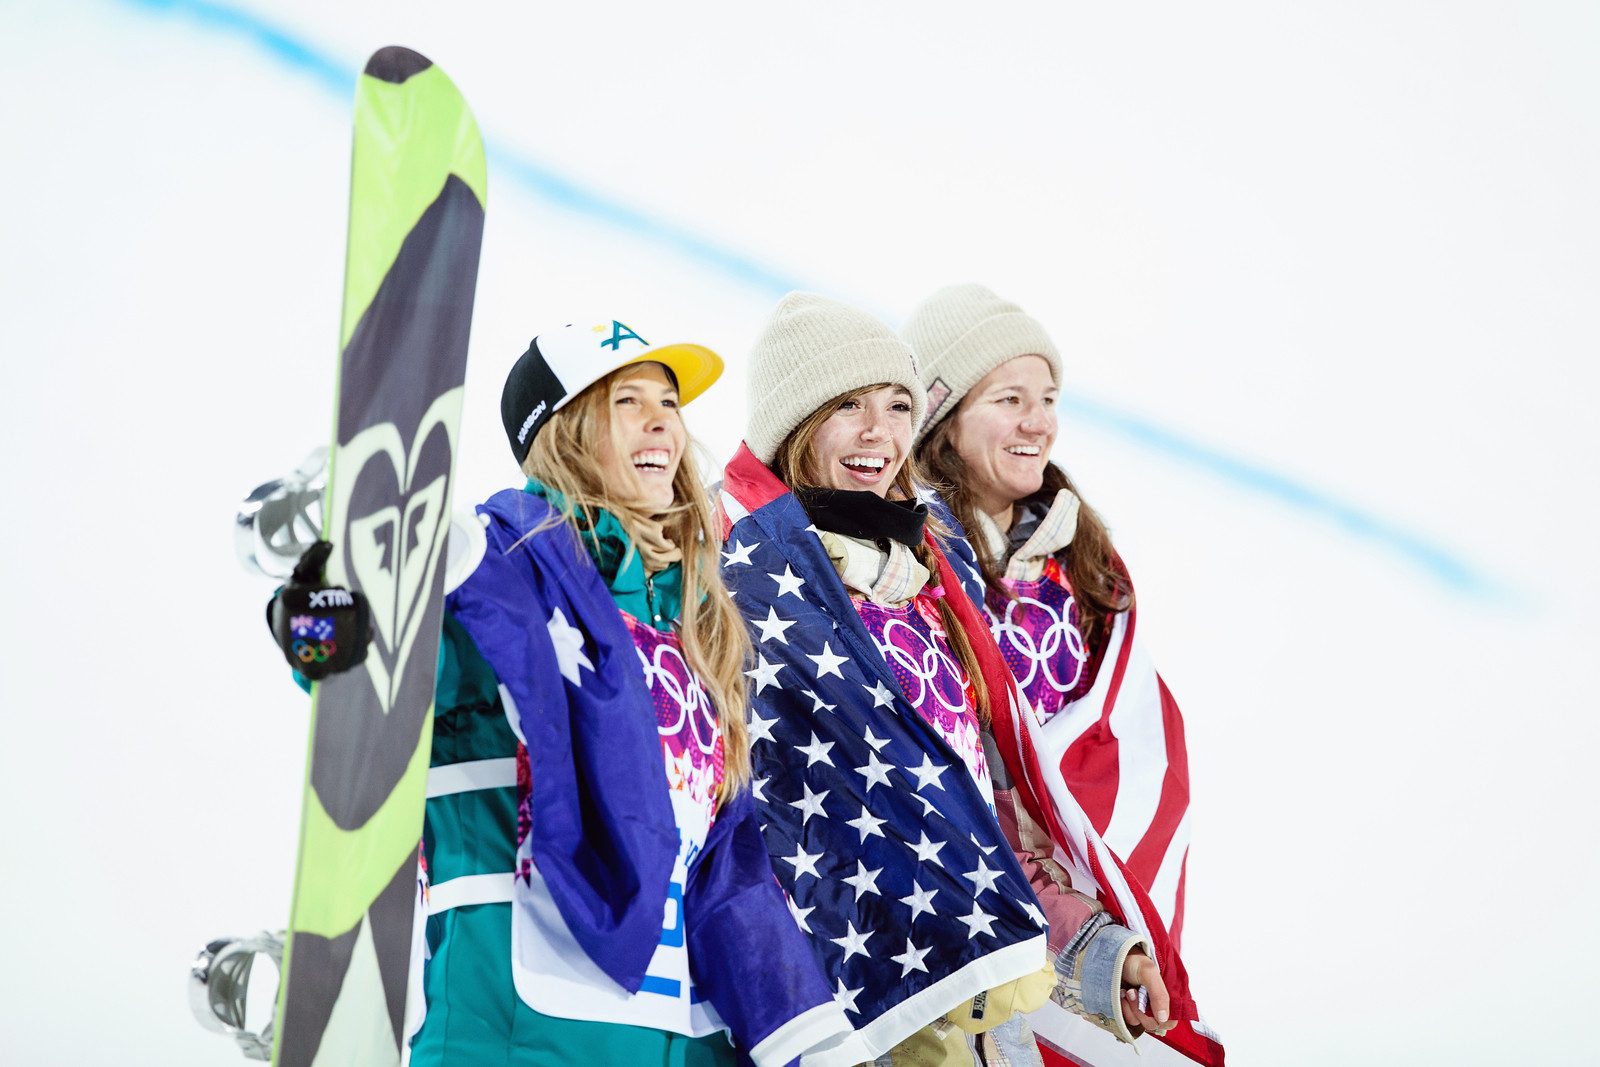 2014 Olympic Winter Games - Sochi, Russia.
Women's halfpipe snowboarding
Photo: Sarah Brunson/U.S. Snowboarding